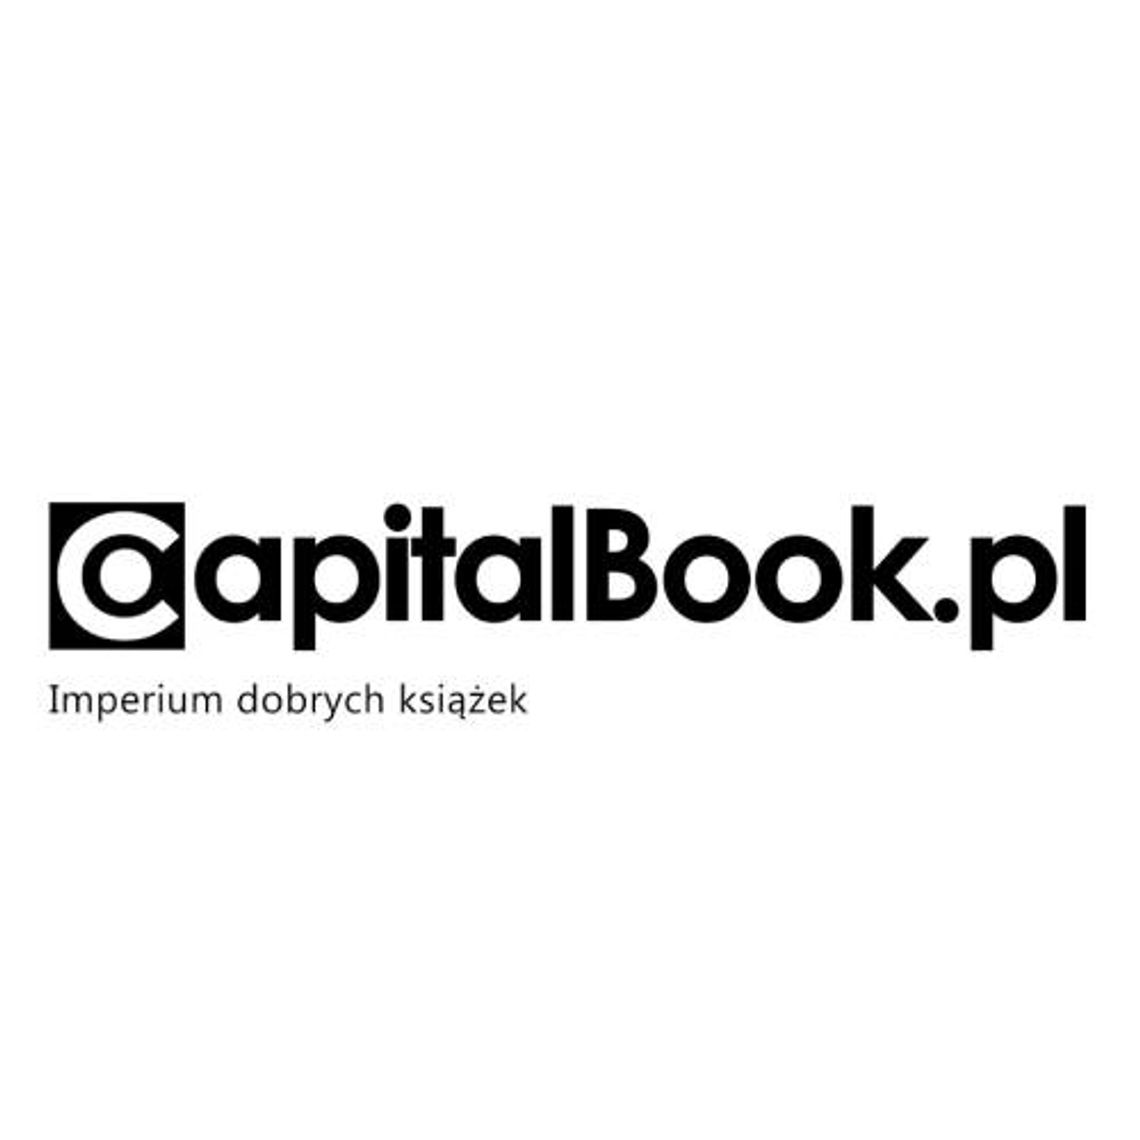 Capitalbook.com.pl - księgarnia internetowa